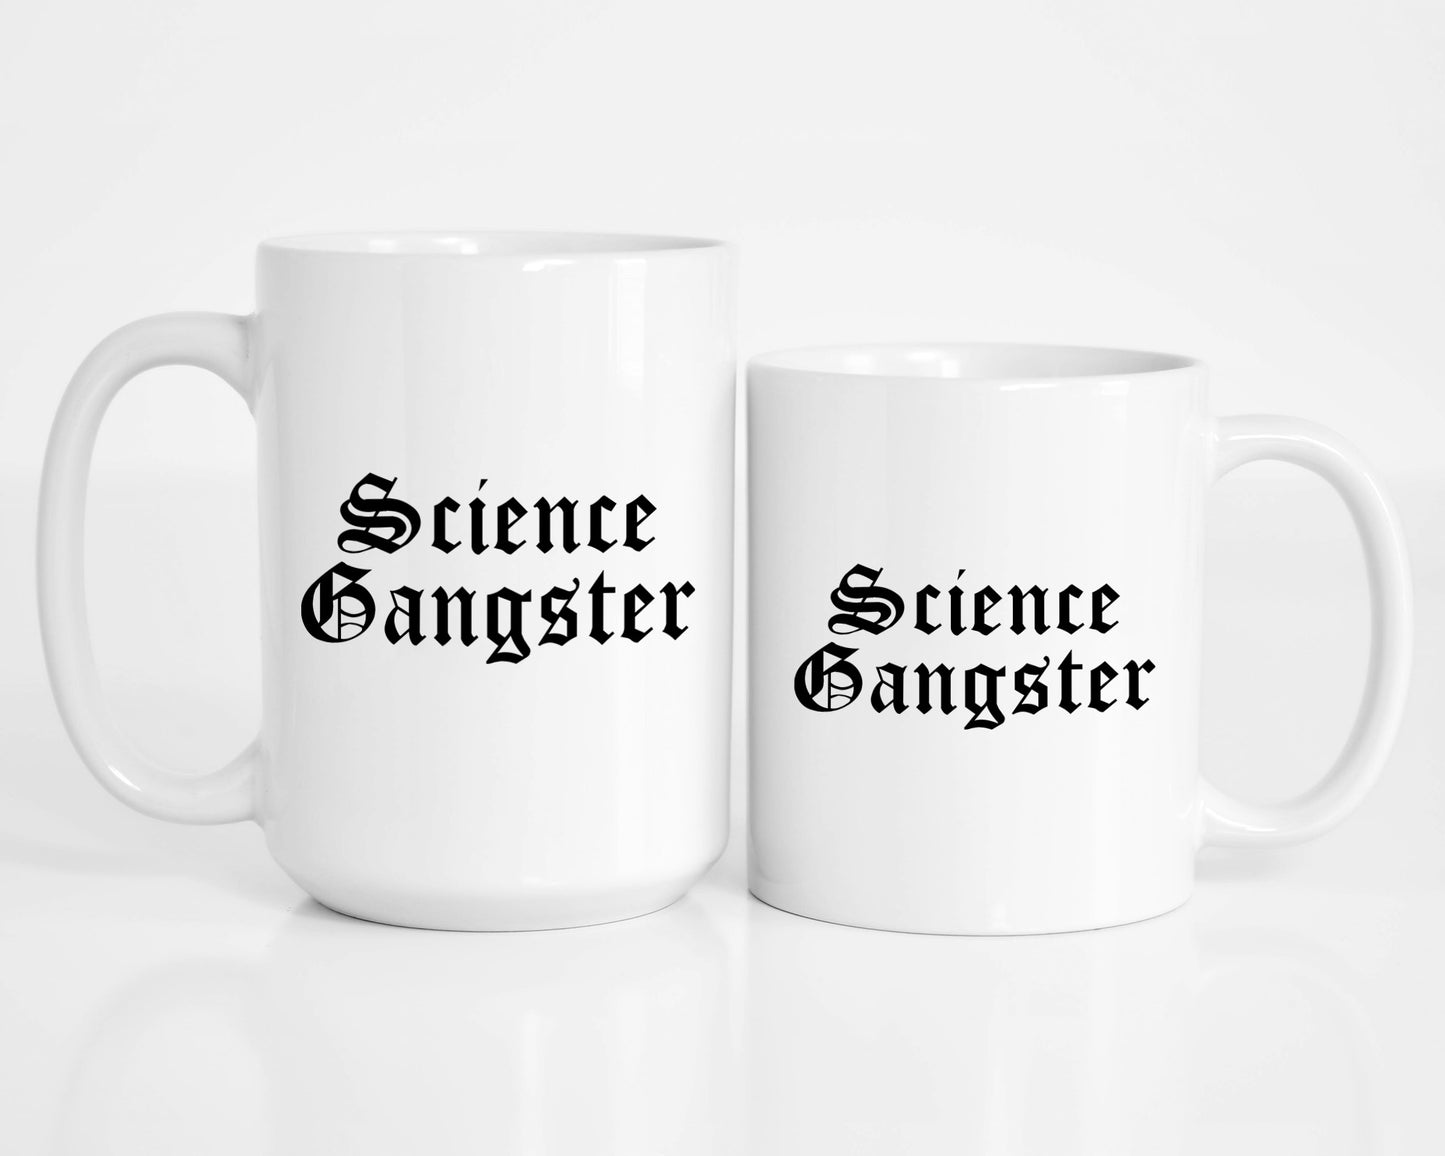 Science Gangster Coffee Mugs